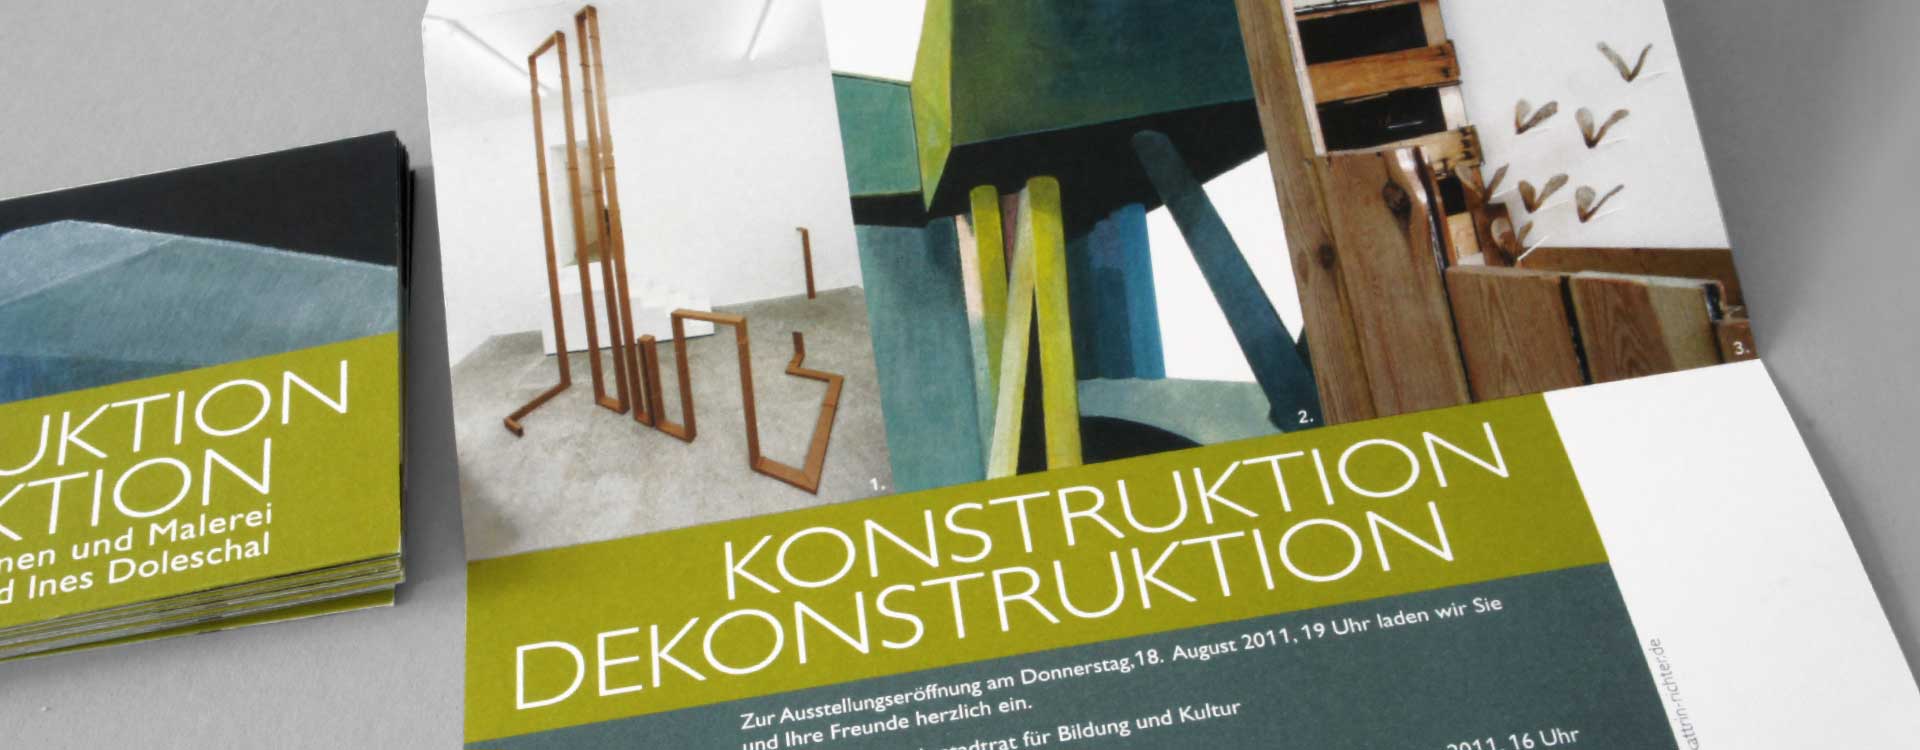 Leaflet for the exhibition Construction Deconstruction in the Alte Feuerwache Project Space Berlin; Design: Kattrin Richter | Graphic Design Studio